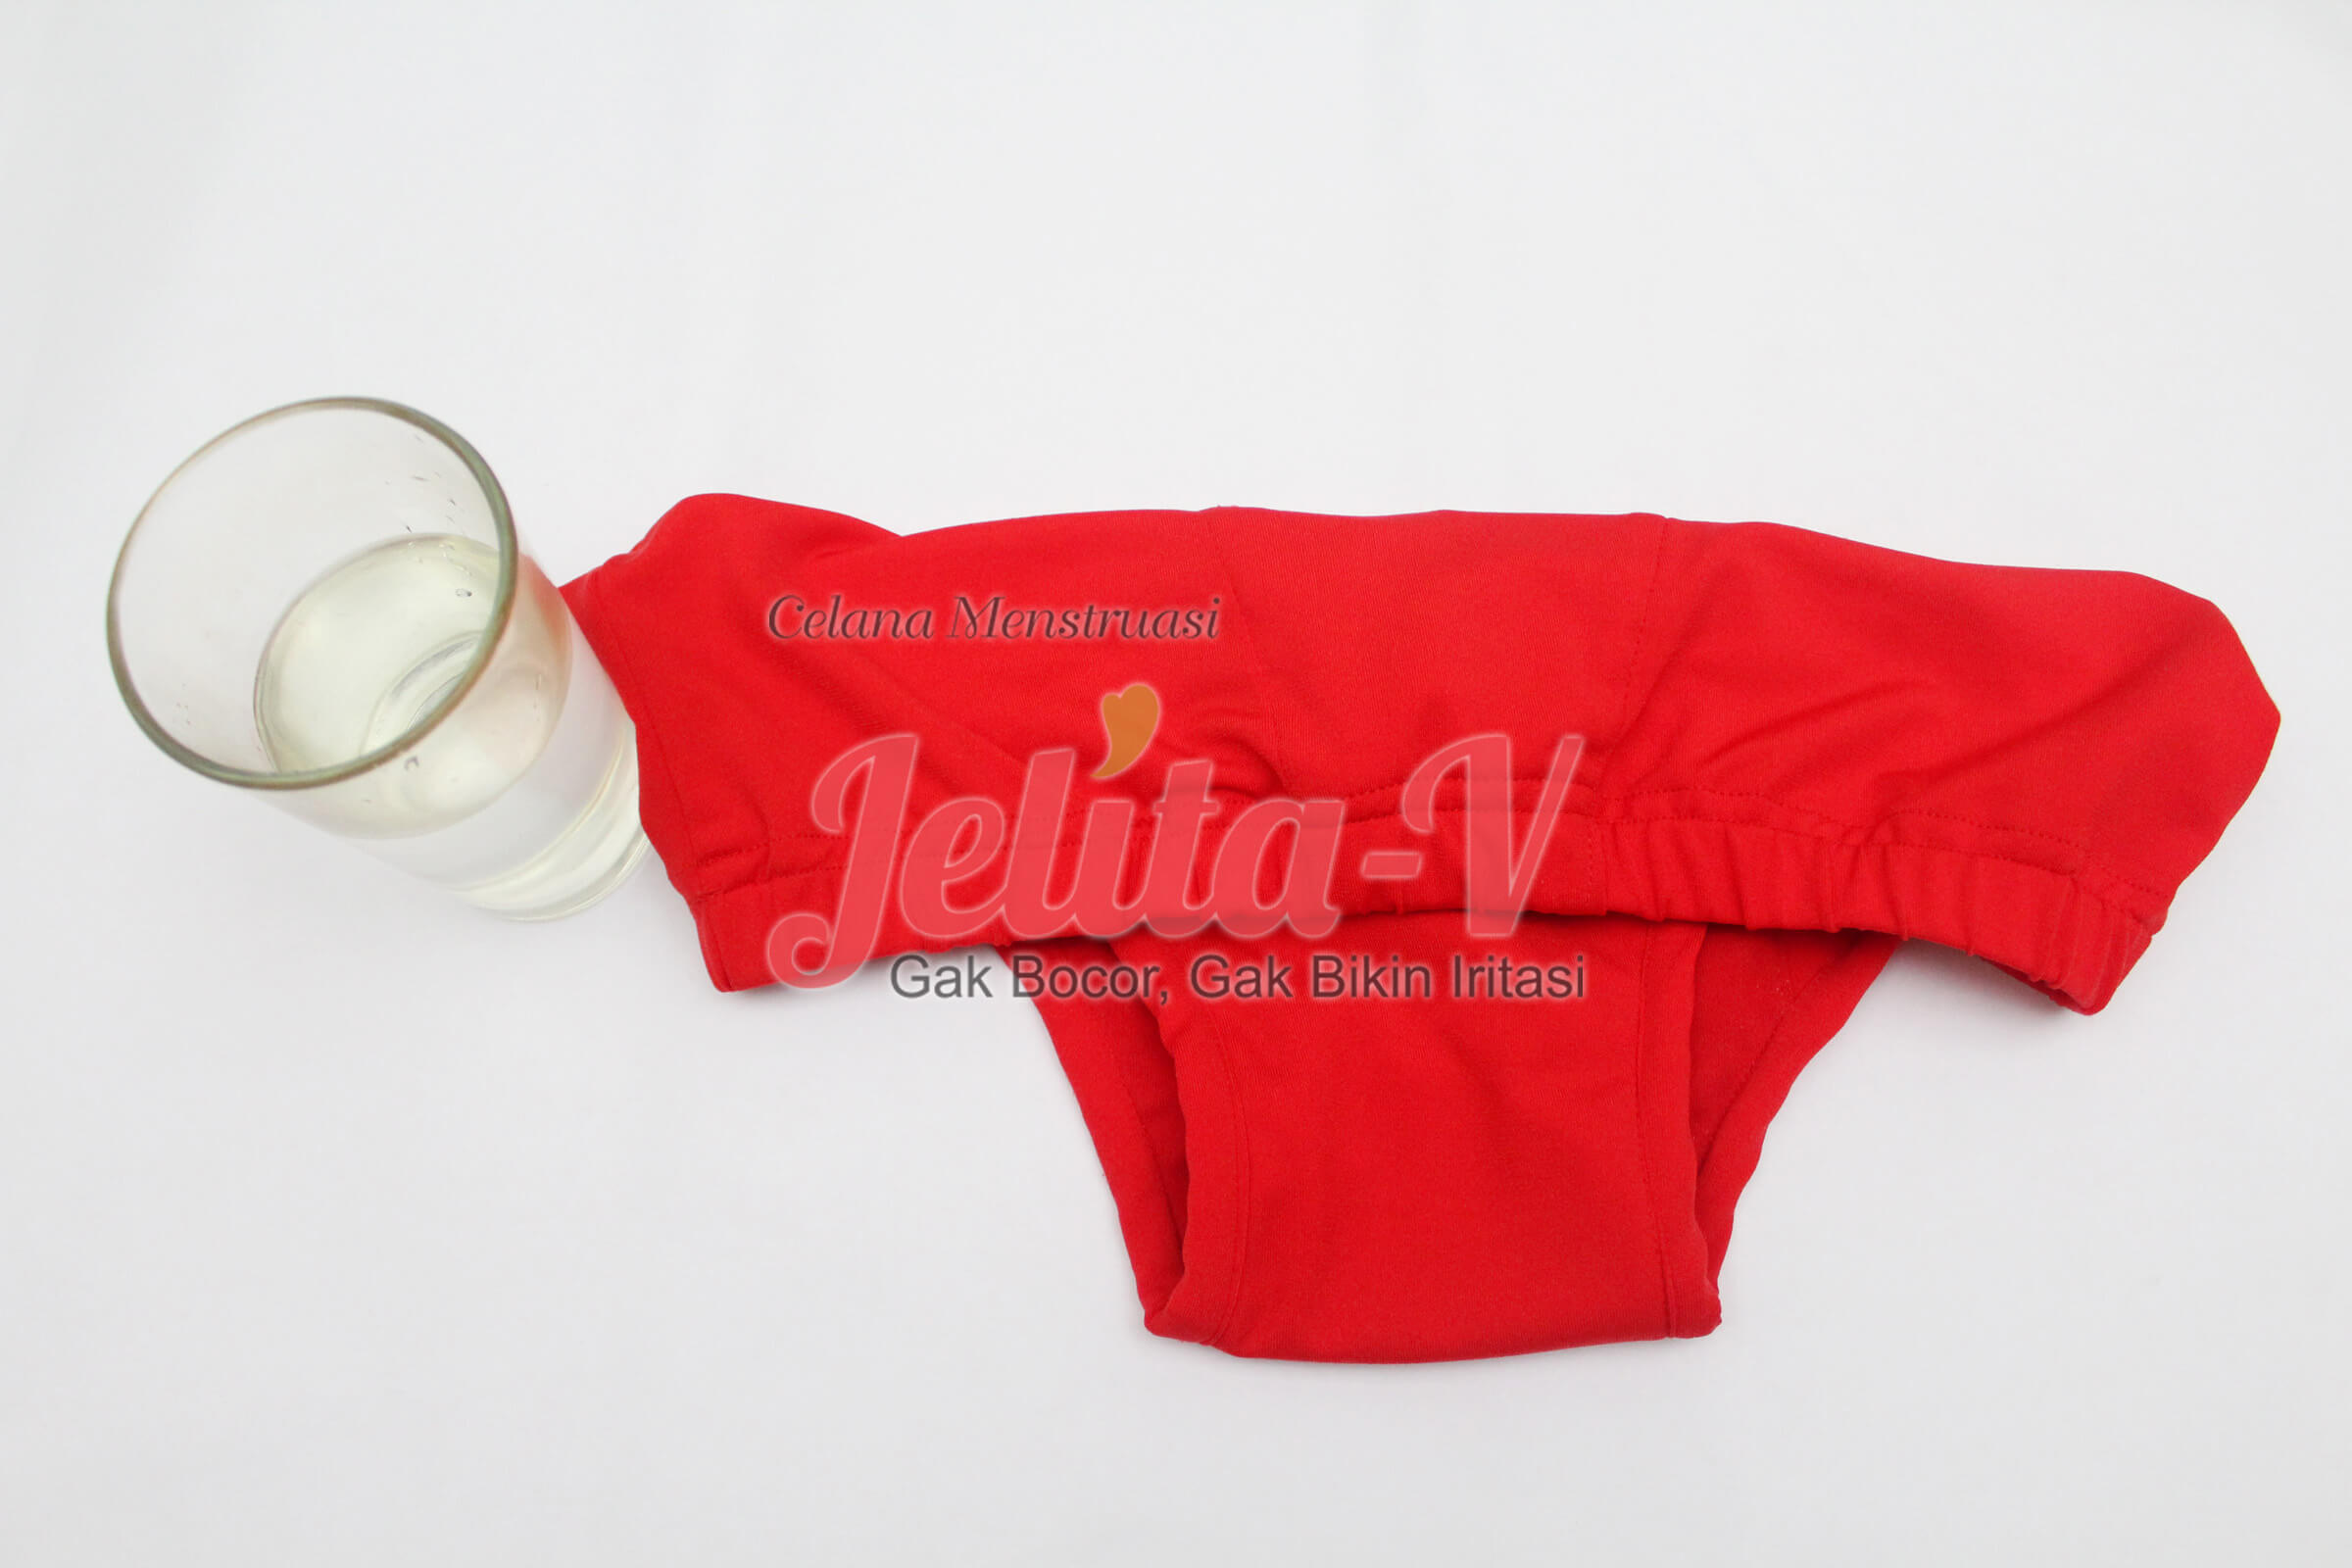 test-waterproof-celana-menstruasi-jelita-1